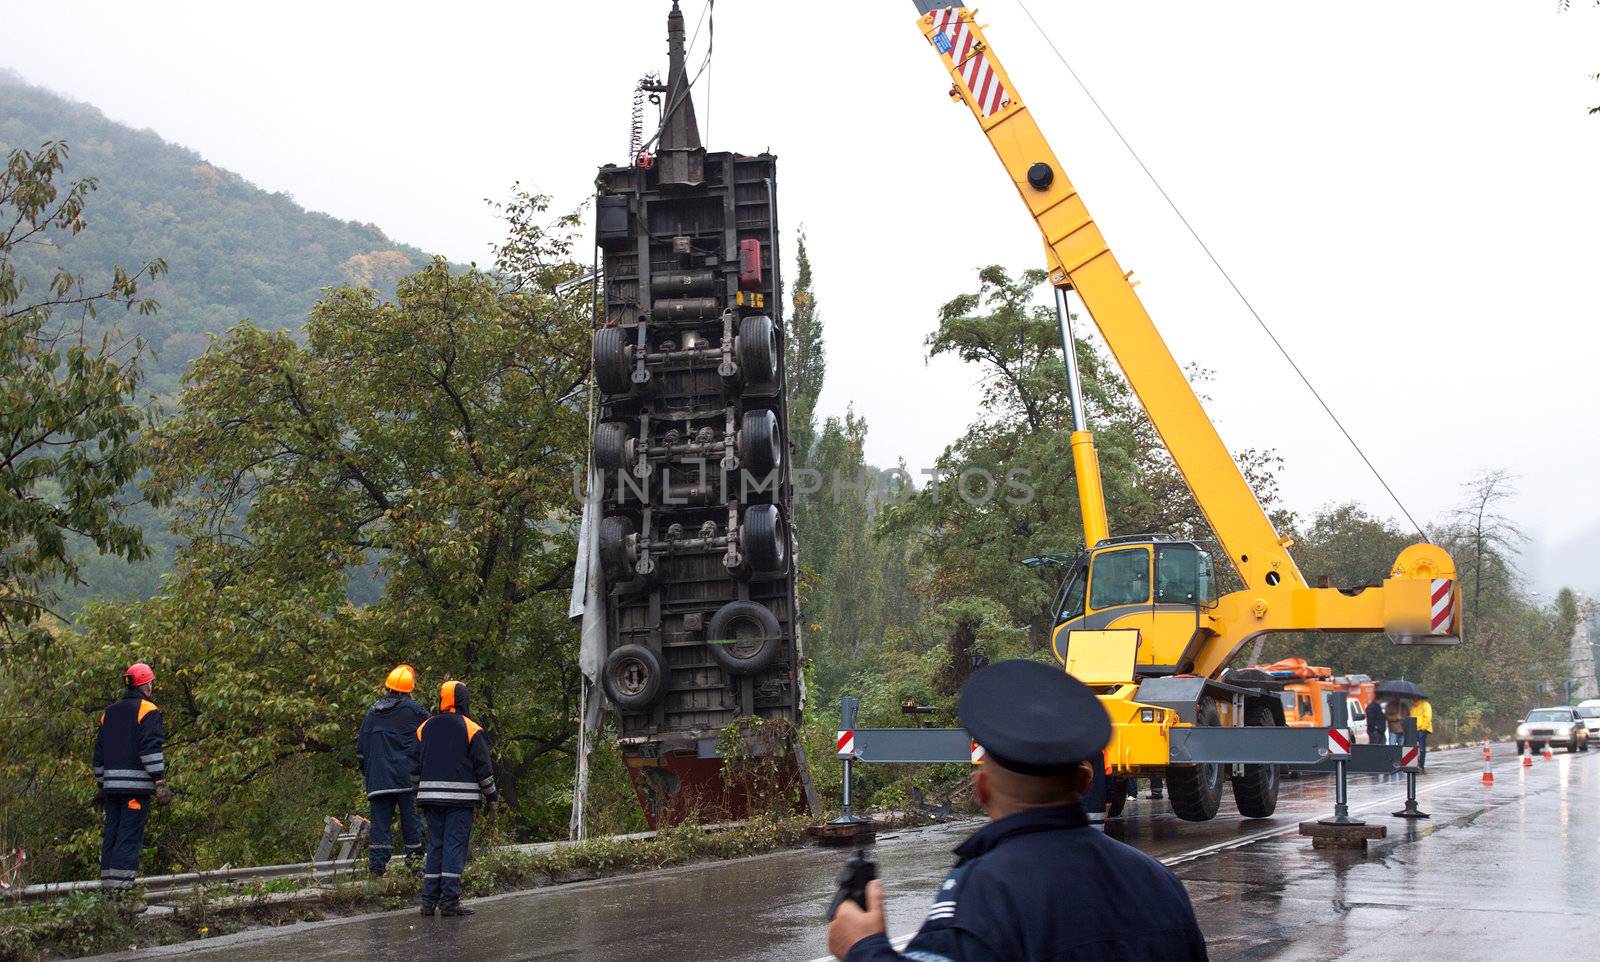 Crane lifting crashed truck by vilevi